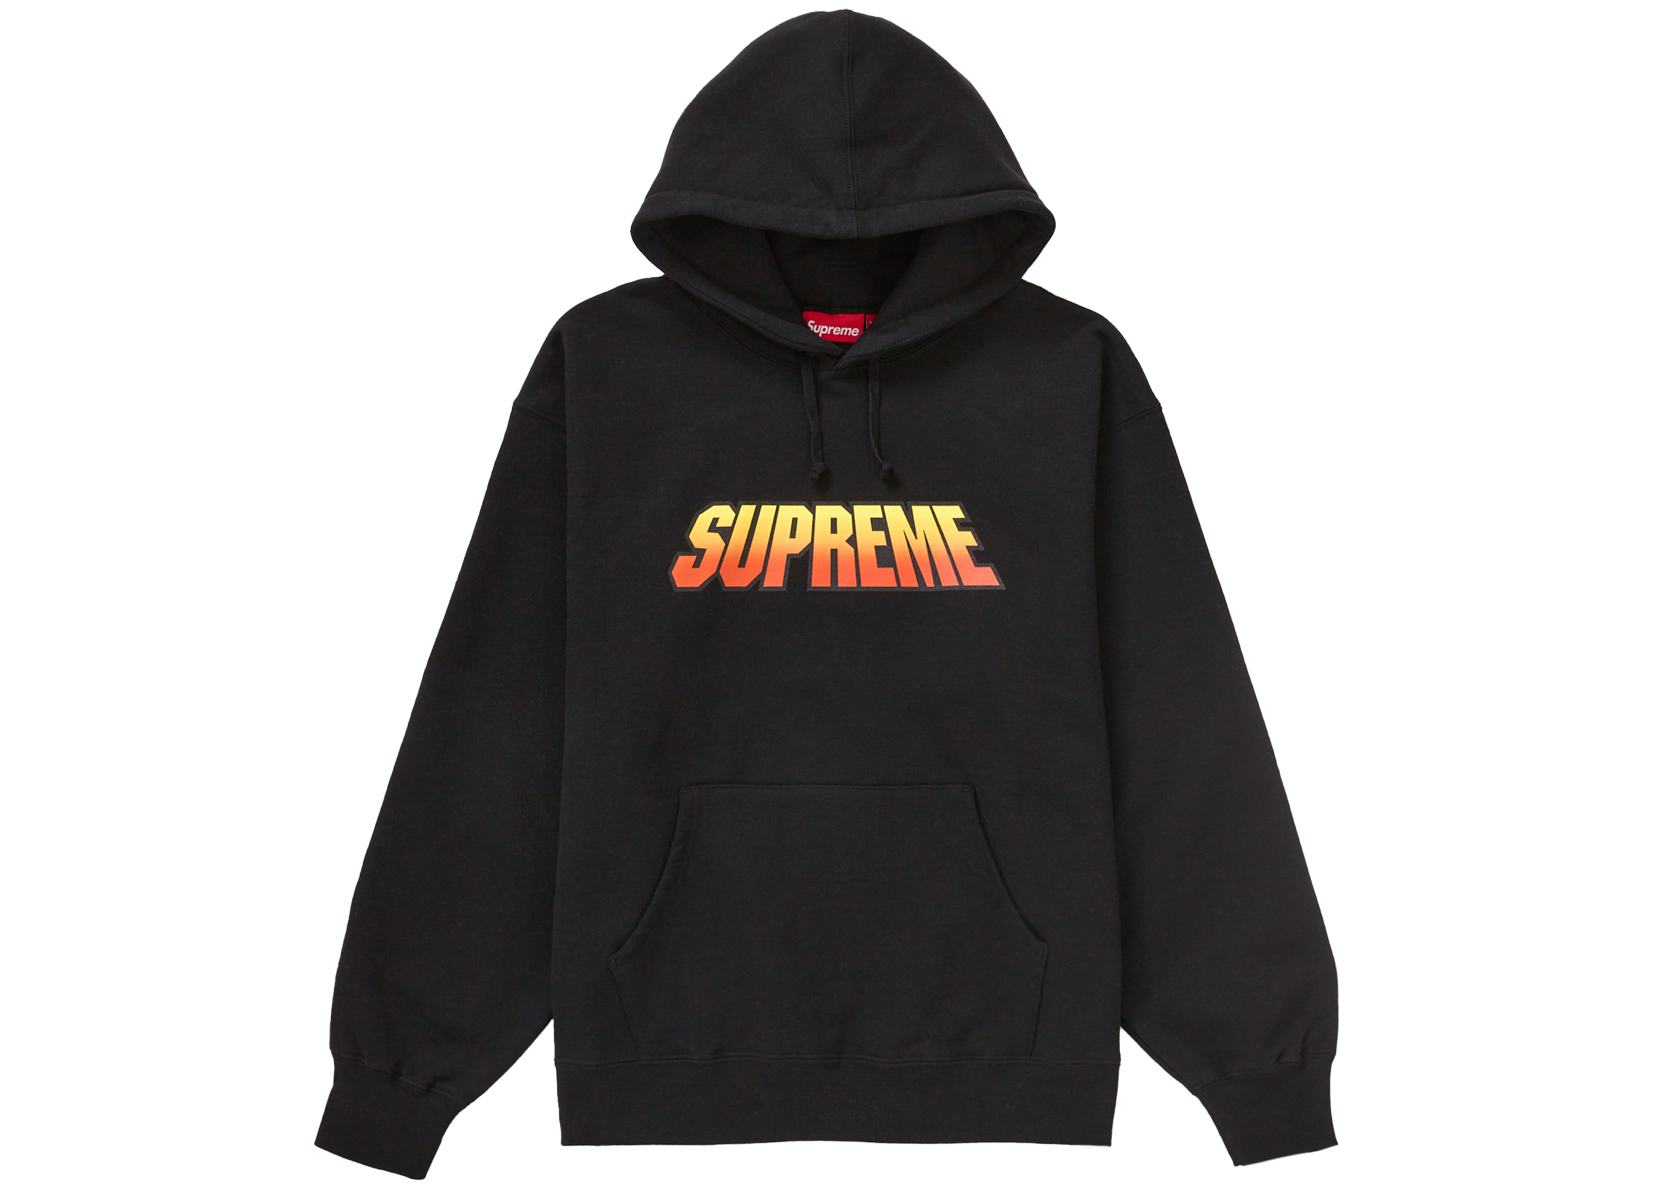 Supreme Gradient Hooded Sweatshirt33500円は厳しいでしょうか